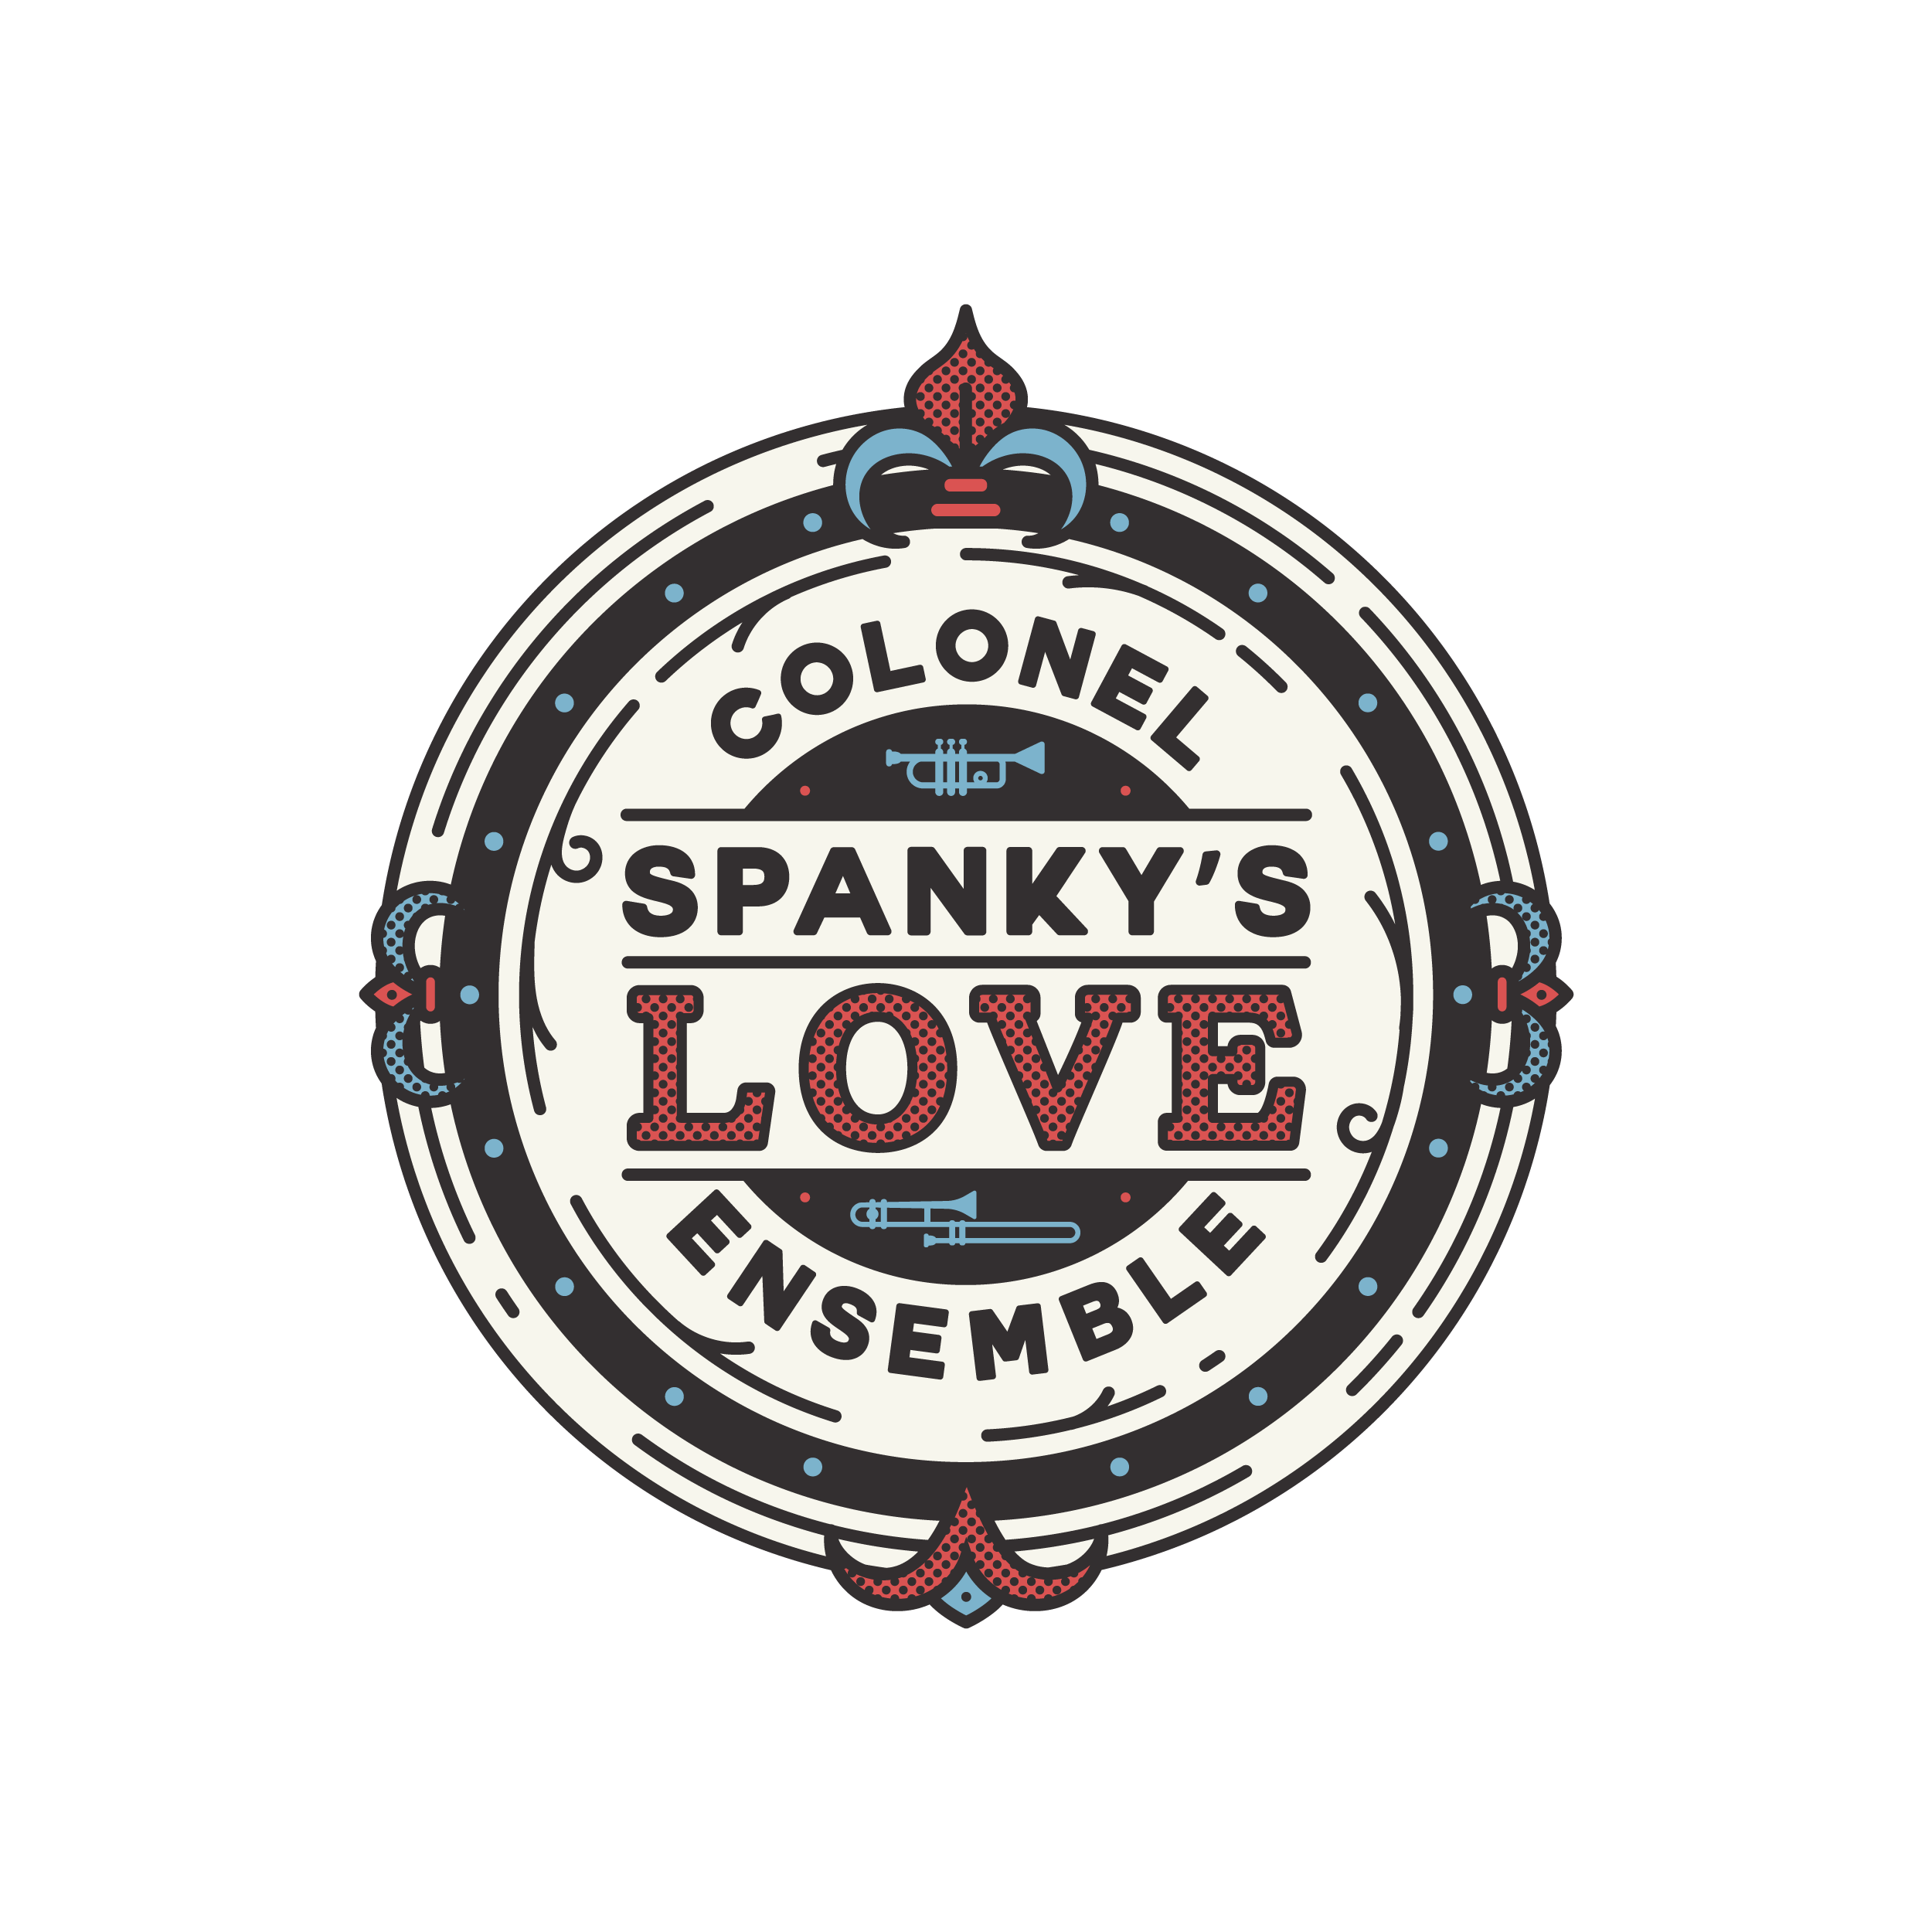 Colonel Spanky's Love Ensemble's logo, designed by BloodFlower